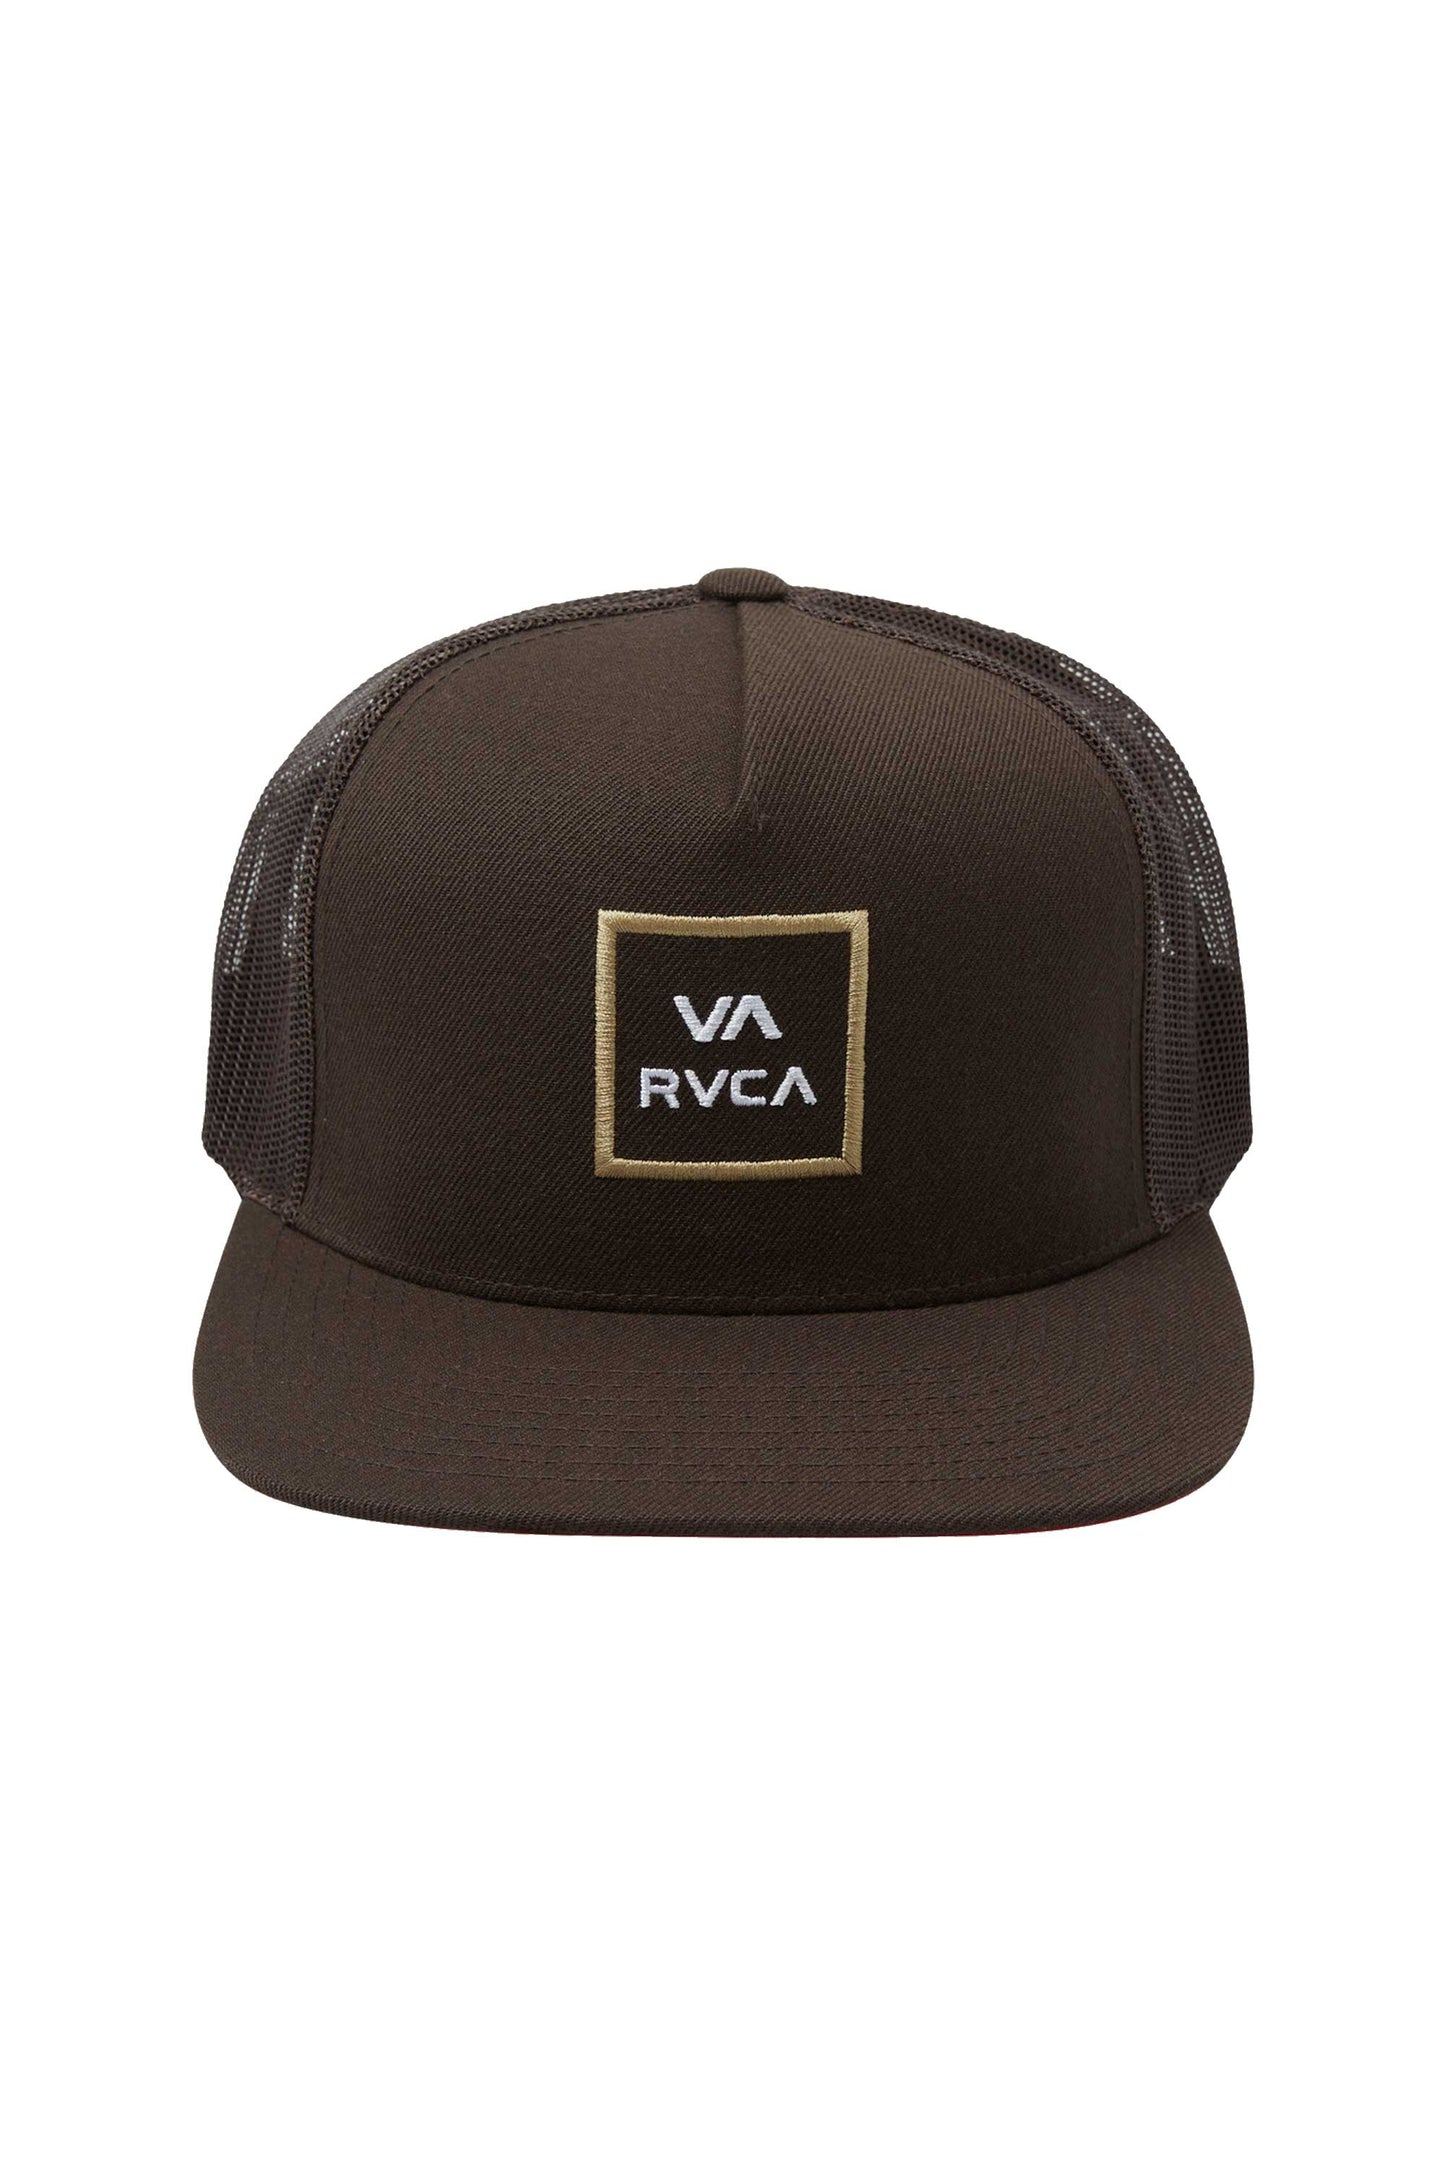 
                  
                    Pukas-Surf-Shop-RVCA-man-trucker-hat-va-all-the-way-chocolate
                  
                